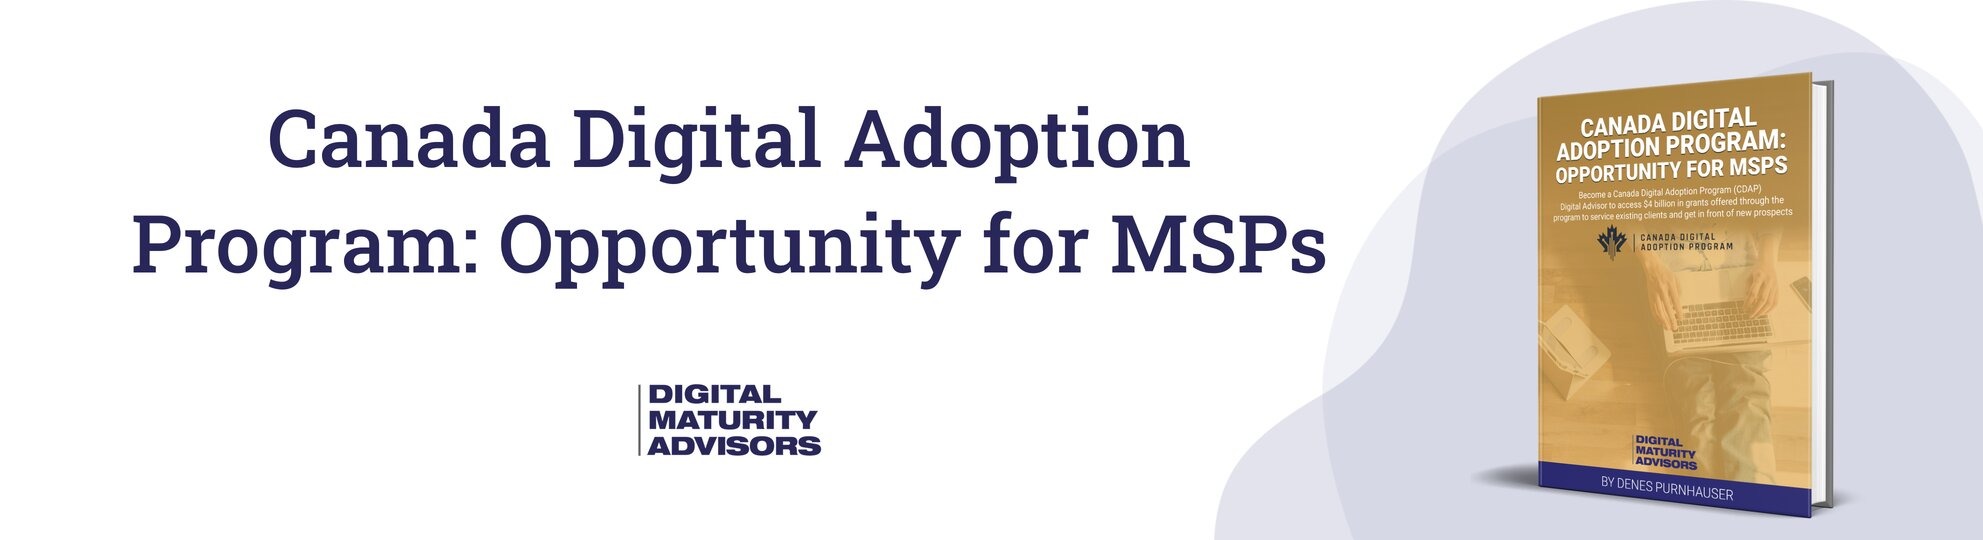 canada-digital-adoption-program-msps-headers